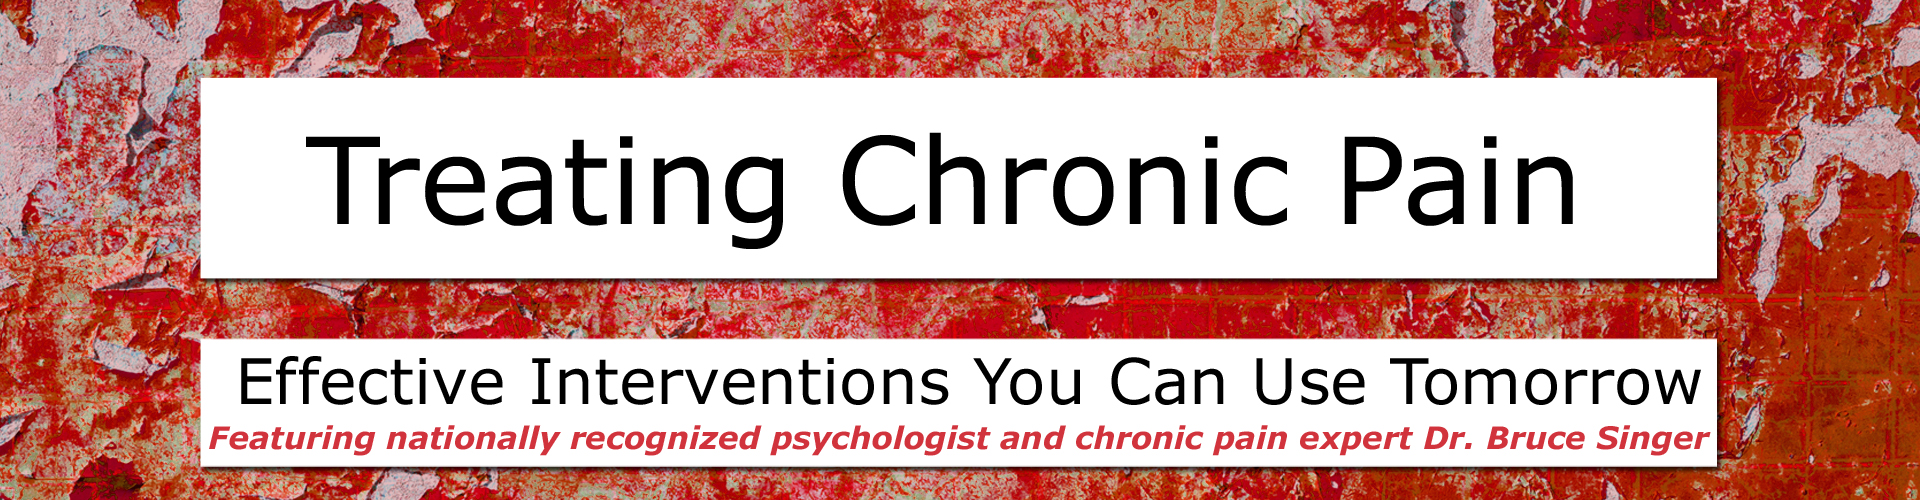 Treating Chronic Pain Header